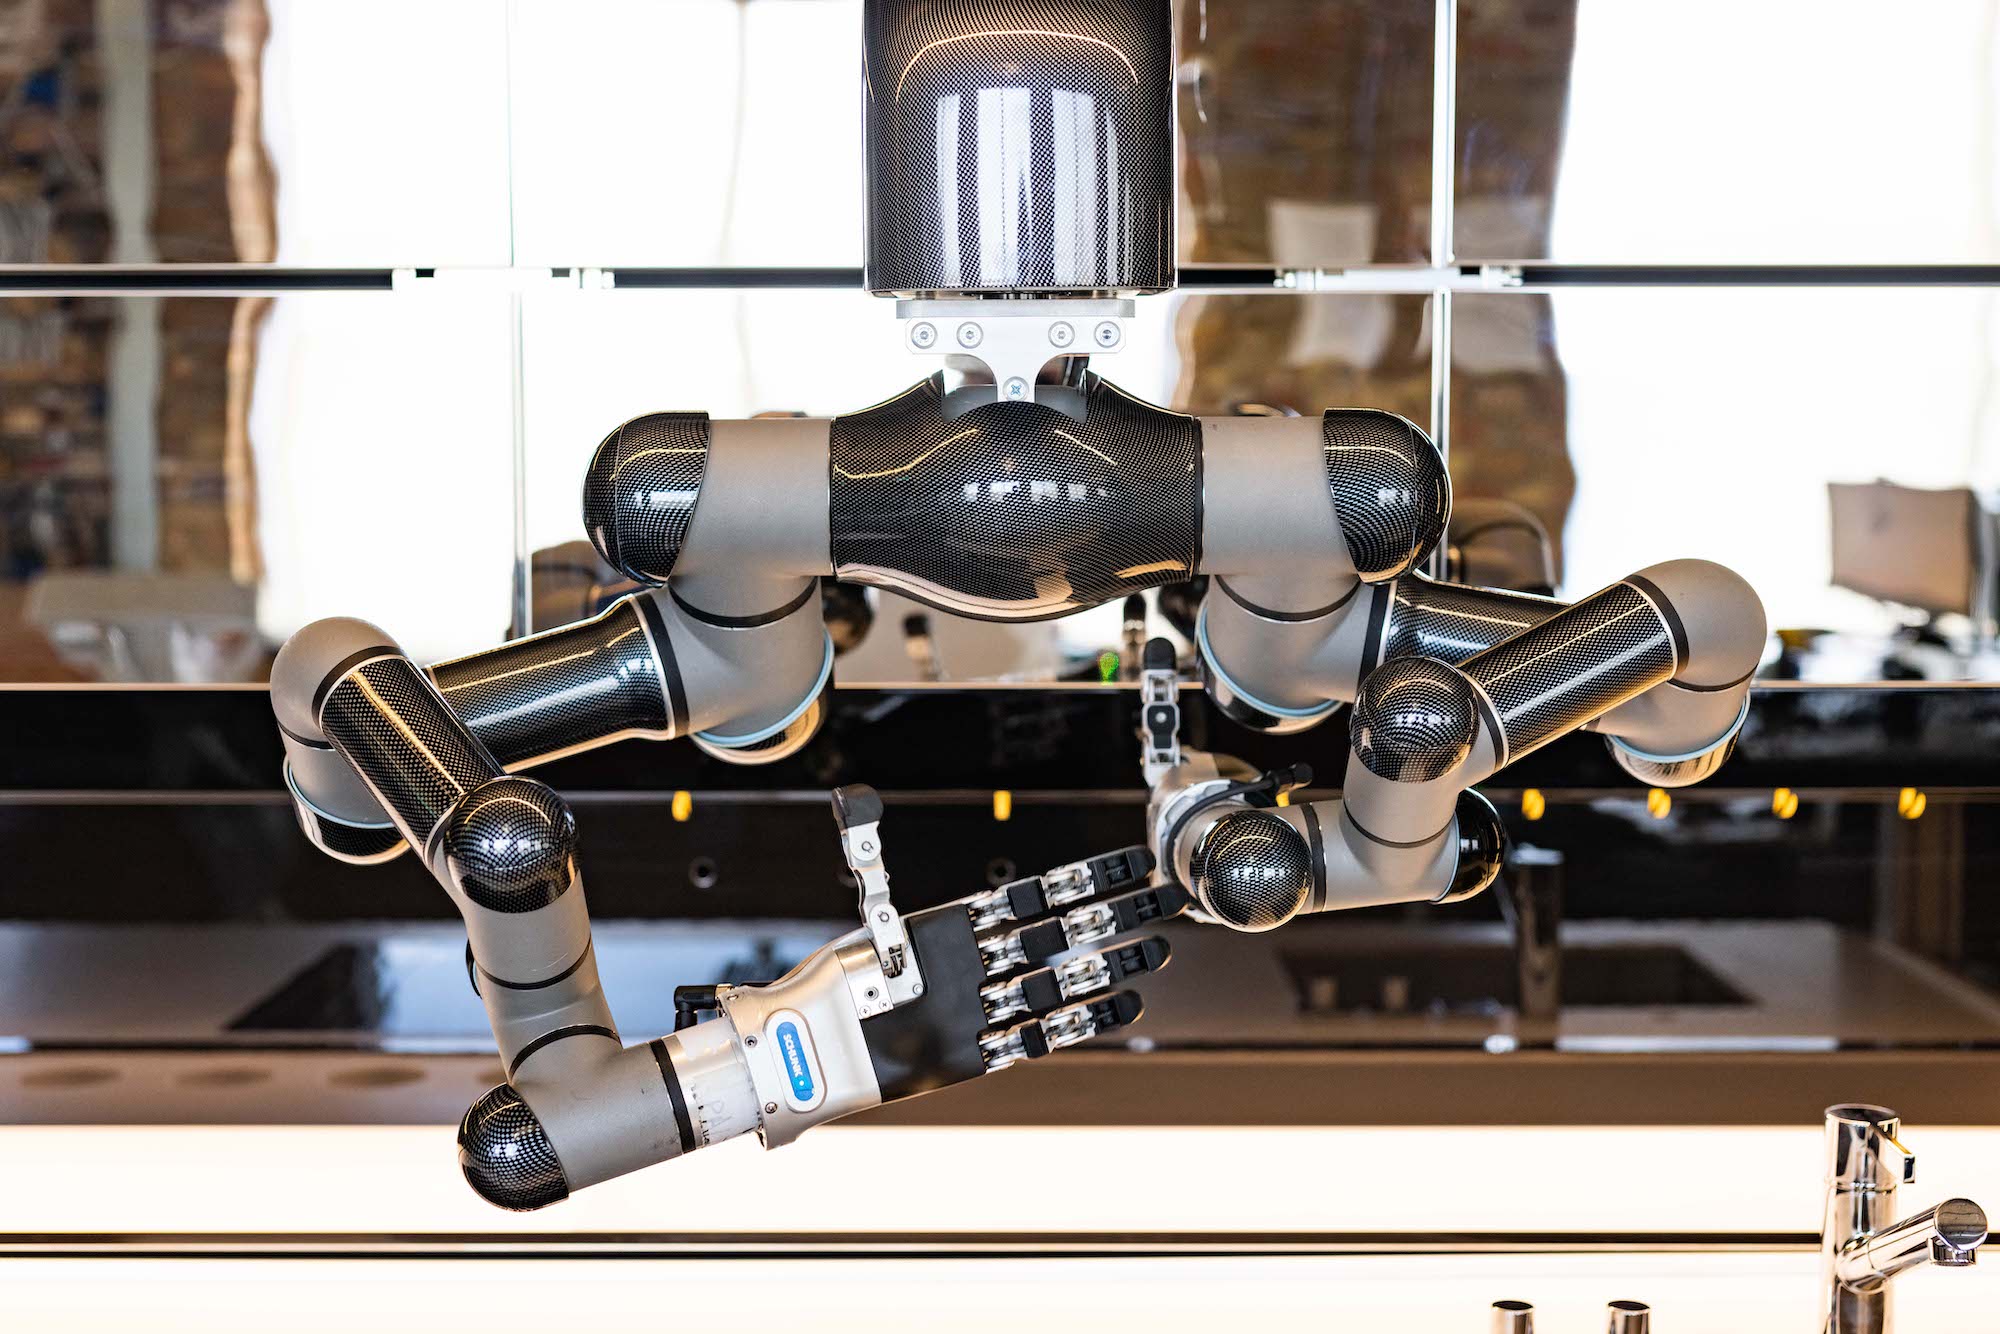 Moley robot hands built to last